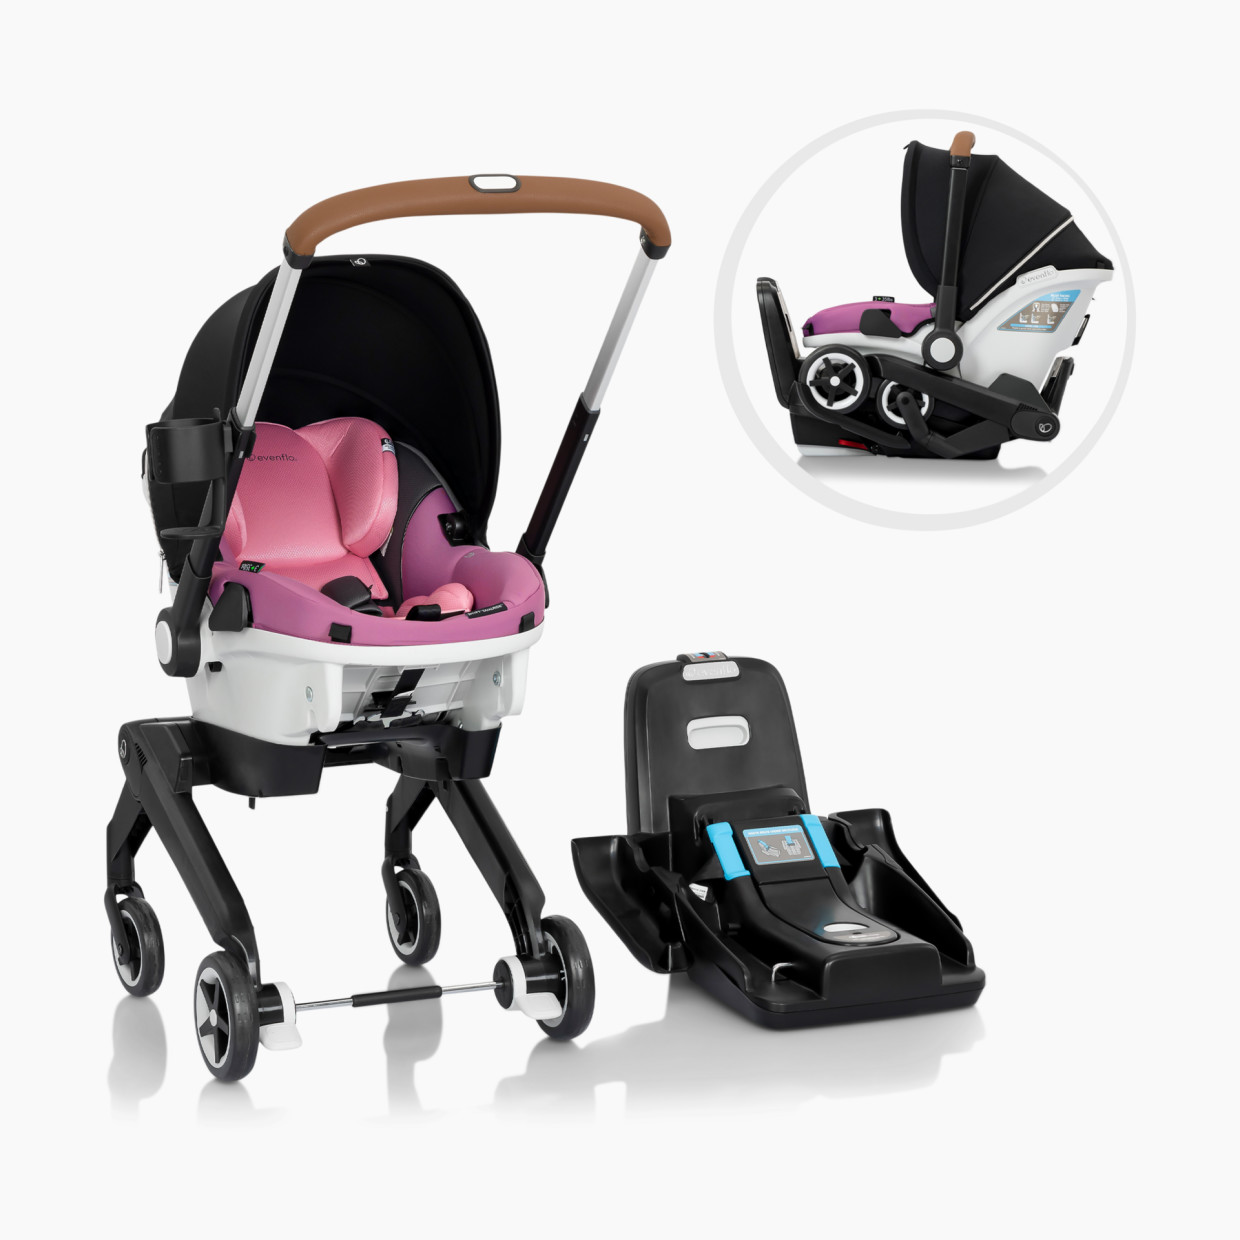 Evenflo Gold Shyft DualRide Infant Car Seat and Stroller Combo - Opal Pink.